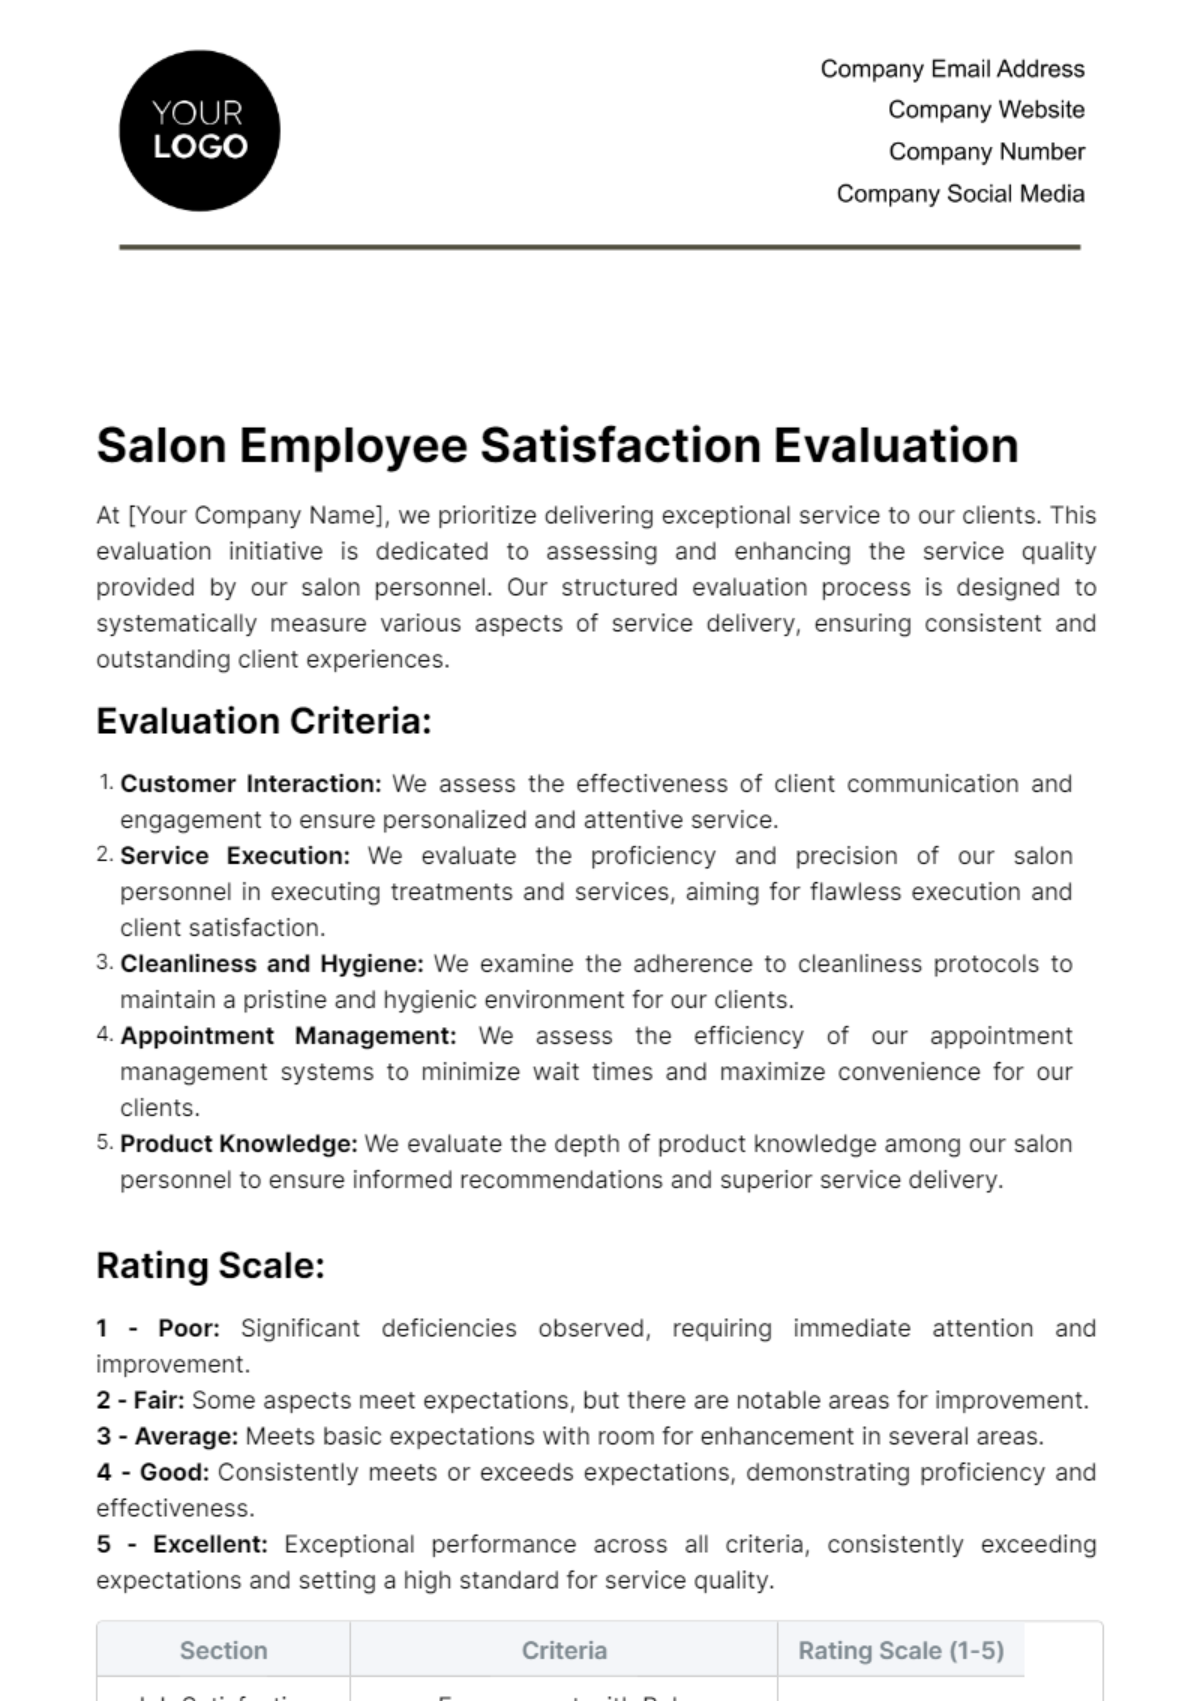 Salon Employee Satisfaction Evaluation Template